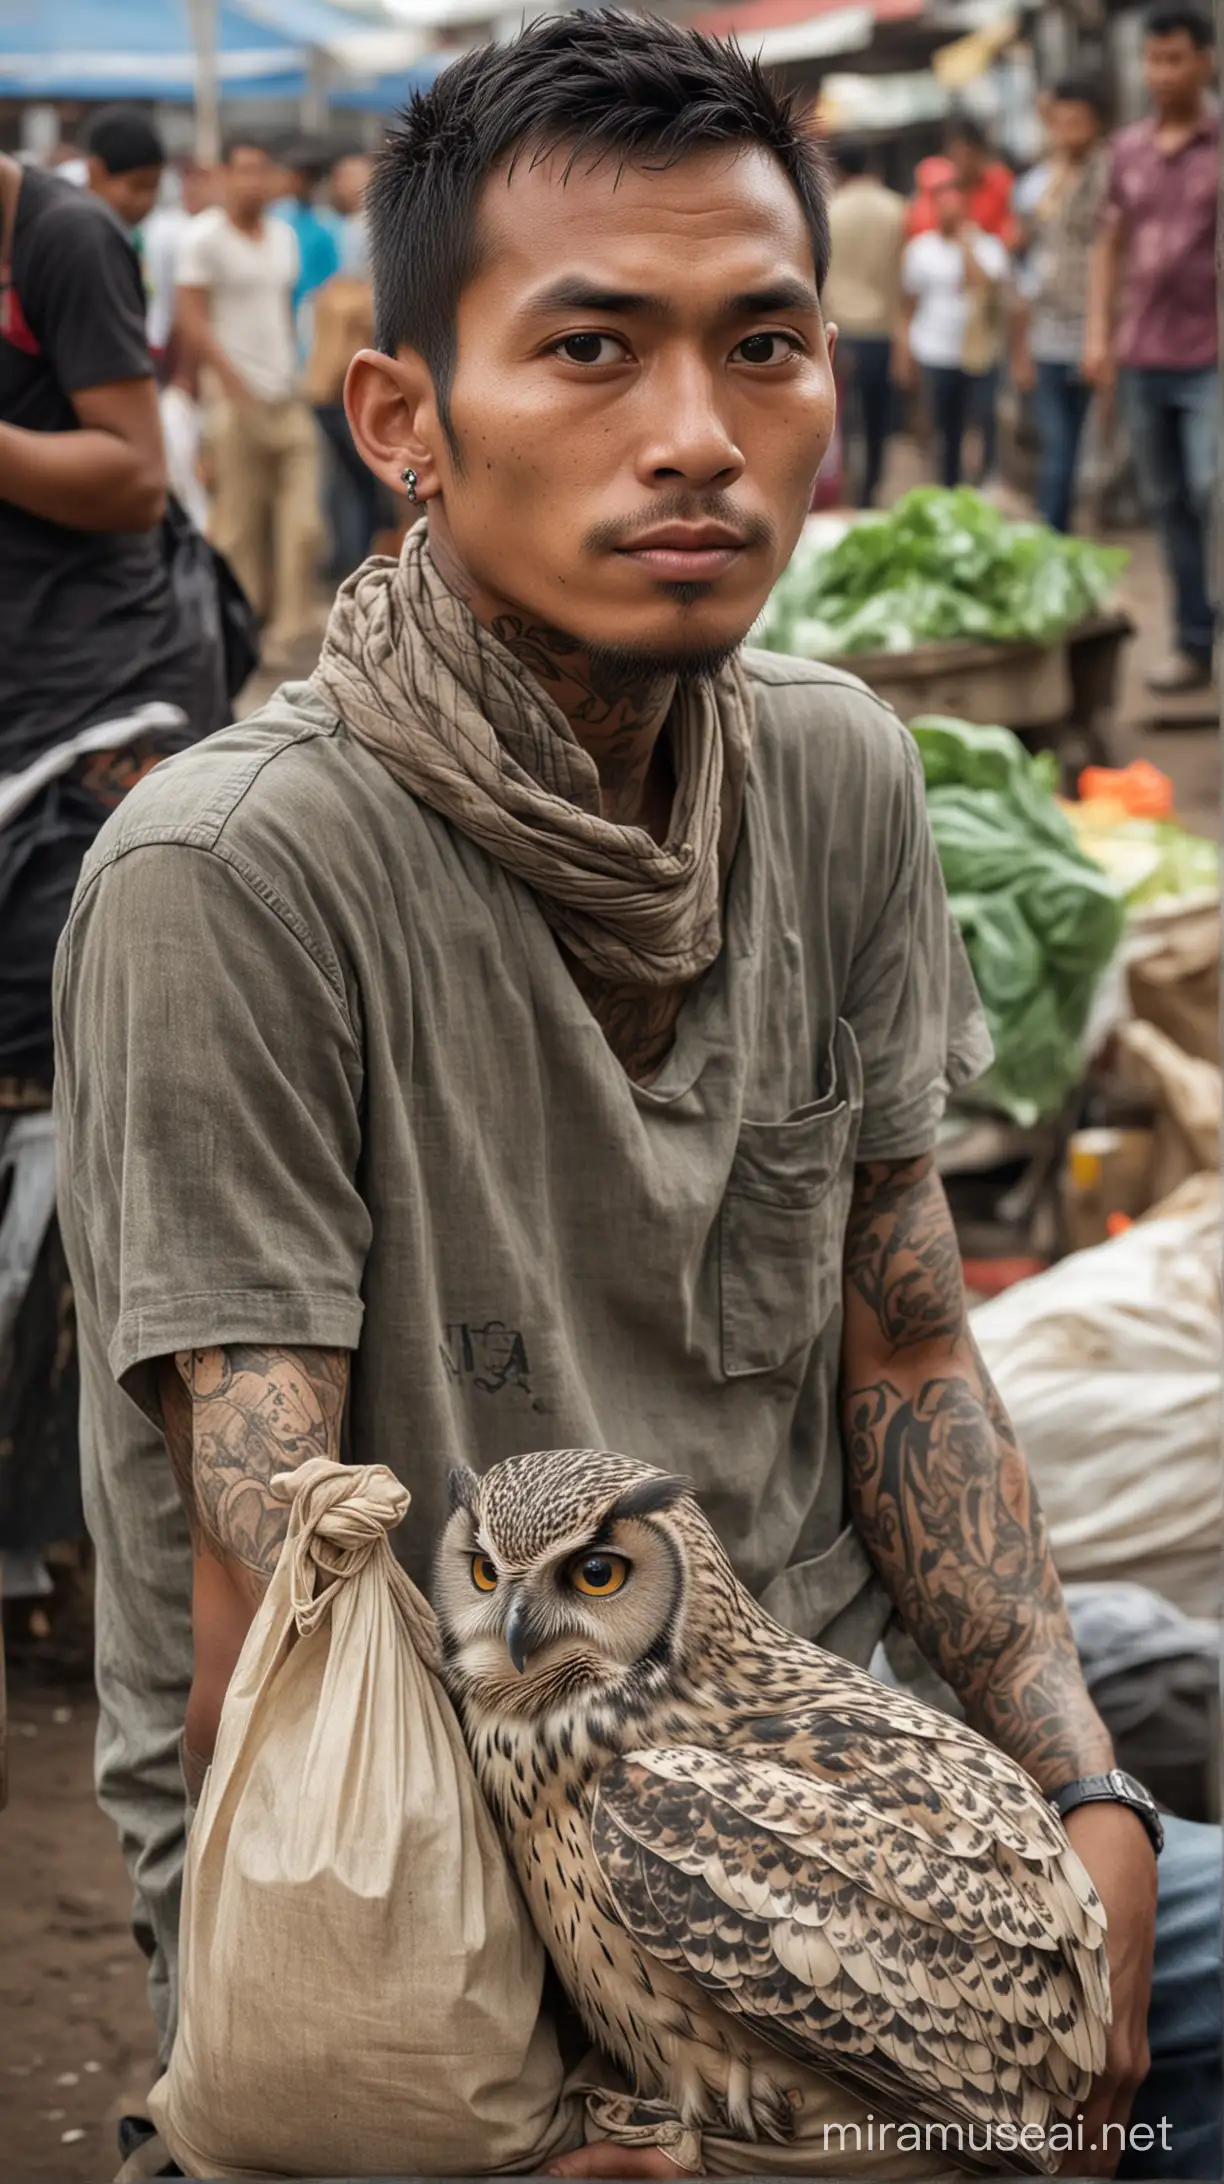 Seorang pria indonesia usia 25 tahun bertatto di leher bergambar burung hantu berbaju kumuh dan lusuh membawa karung kotor sedang duduk di sebuah pasar kumuh di indonesia dan di belakang nya banyak kerumunan manusia ibu ibu bawa plastik belanjaan sayur sayuran